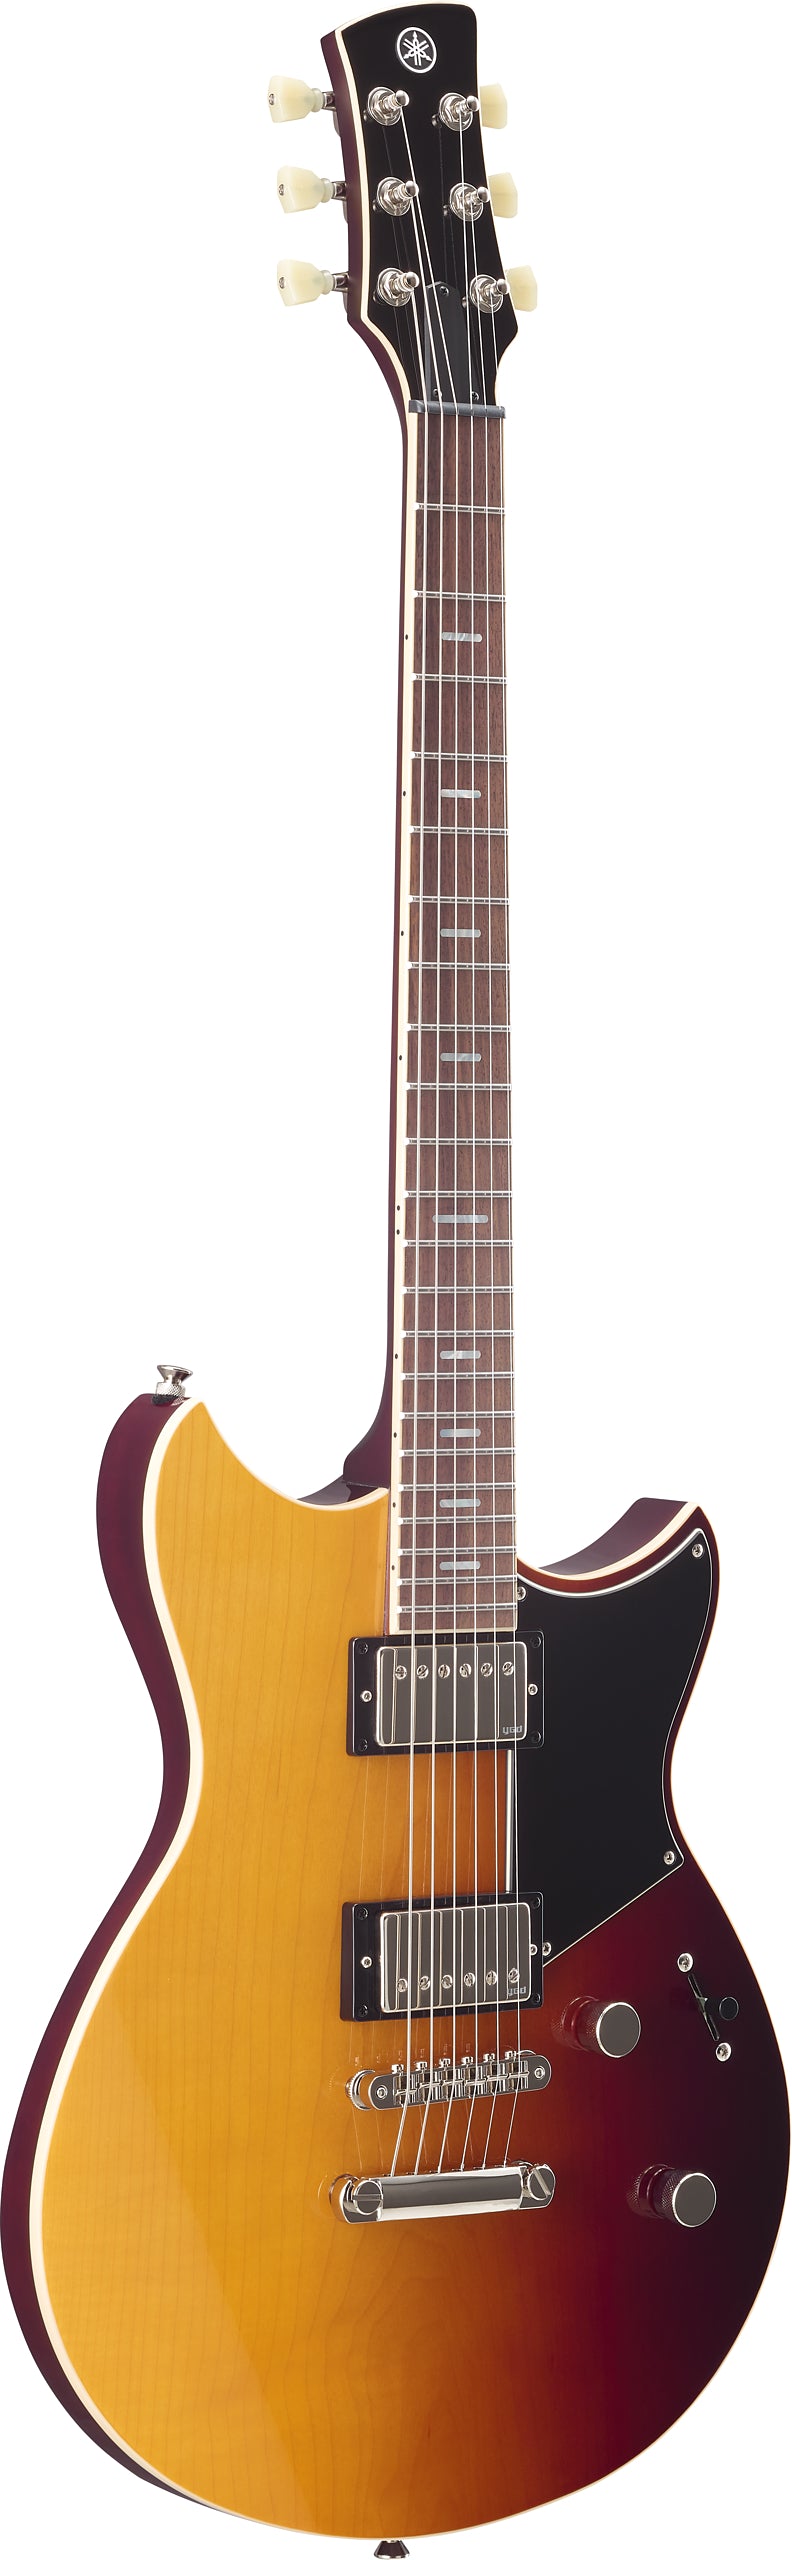 Yamaha Revstar II Professional RSP20 Electric Guitar - Made In 